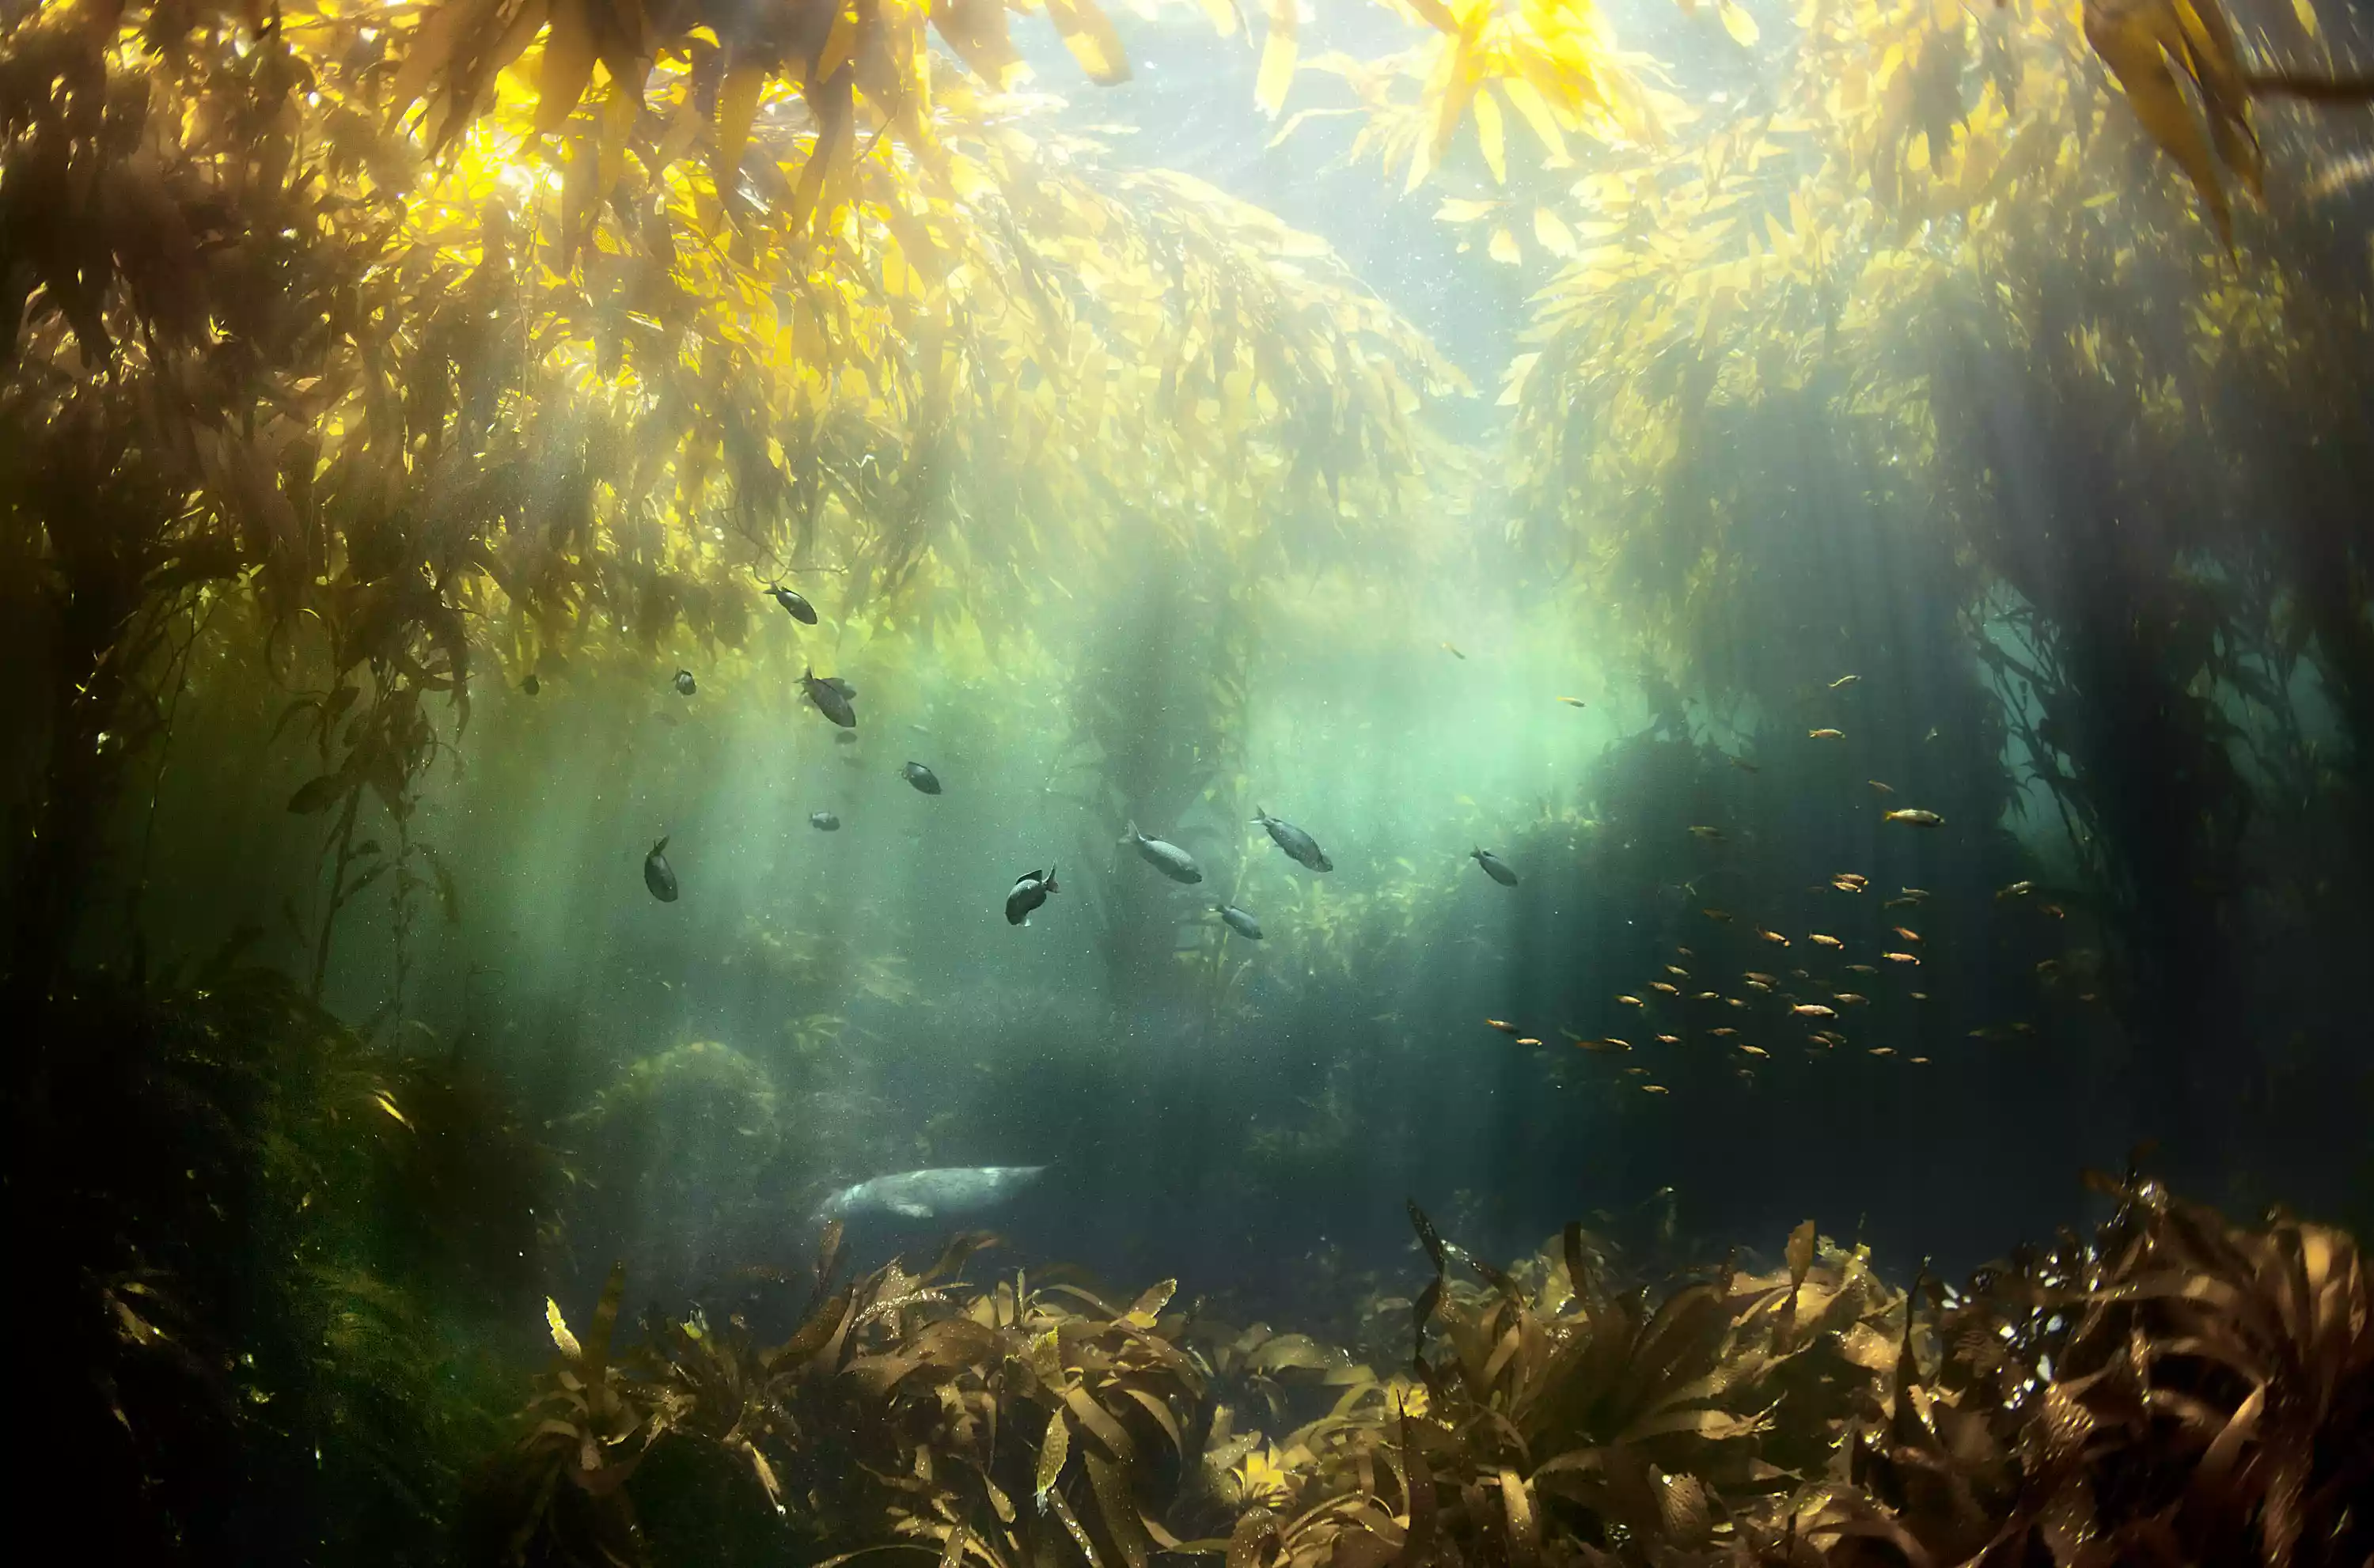 An underwater scene of sun filtering through kelp, illuminating fish and seagrass.